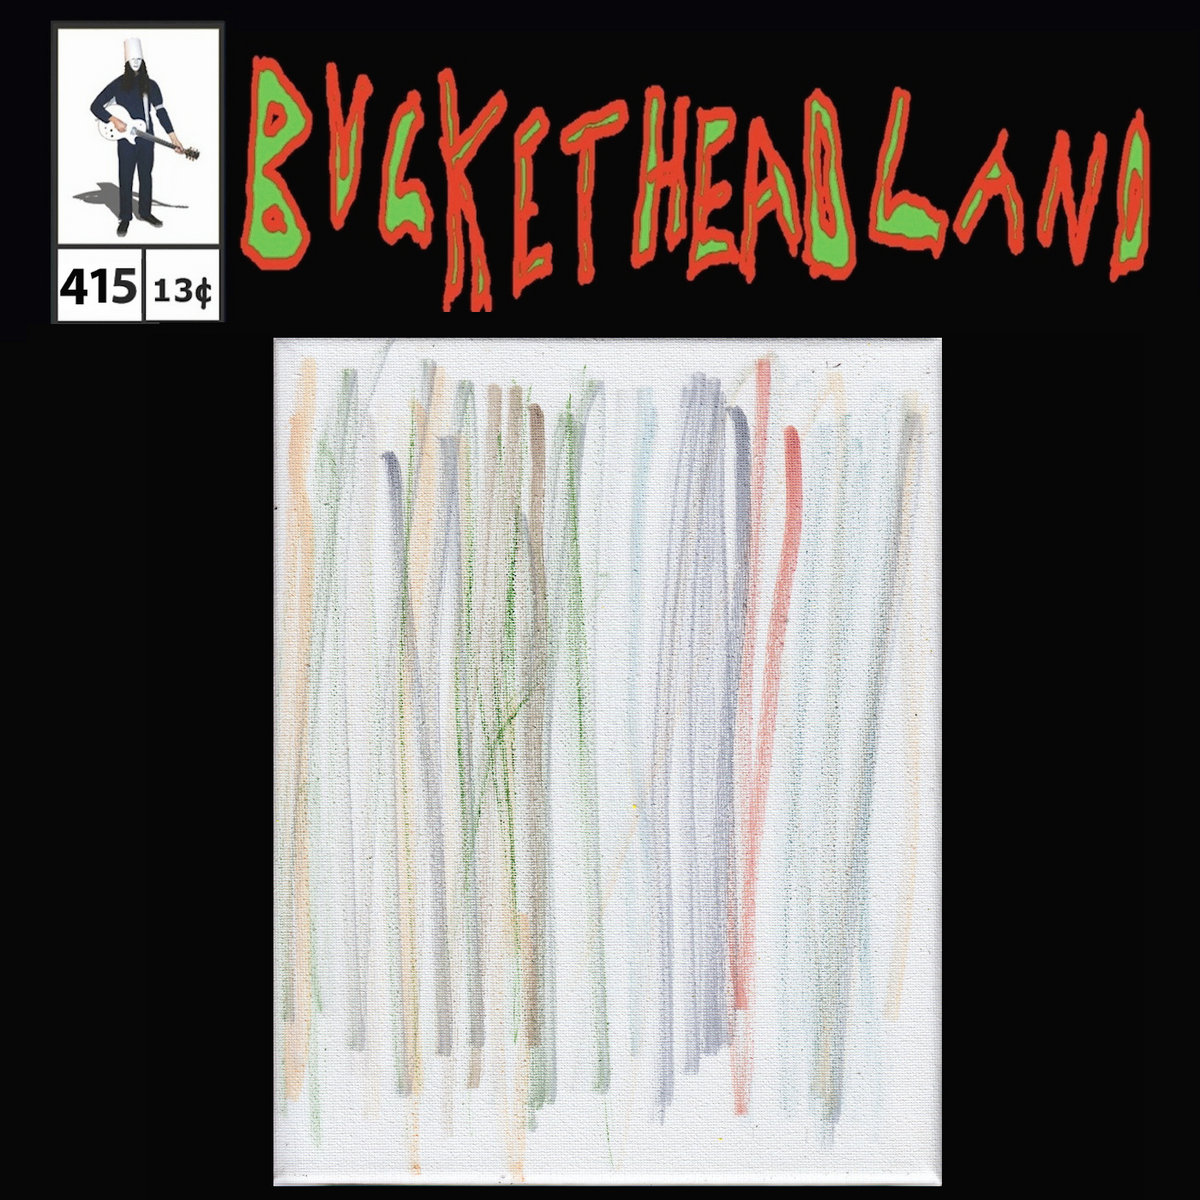 BUCKETHEAD - Pike 415 - Sarahnade cover 